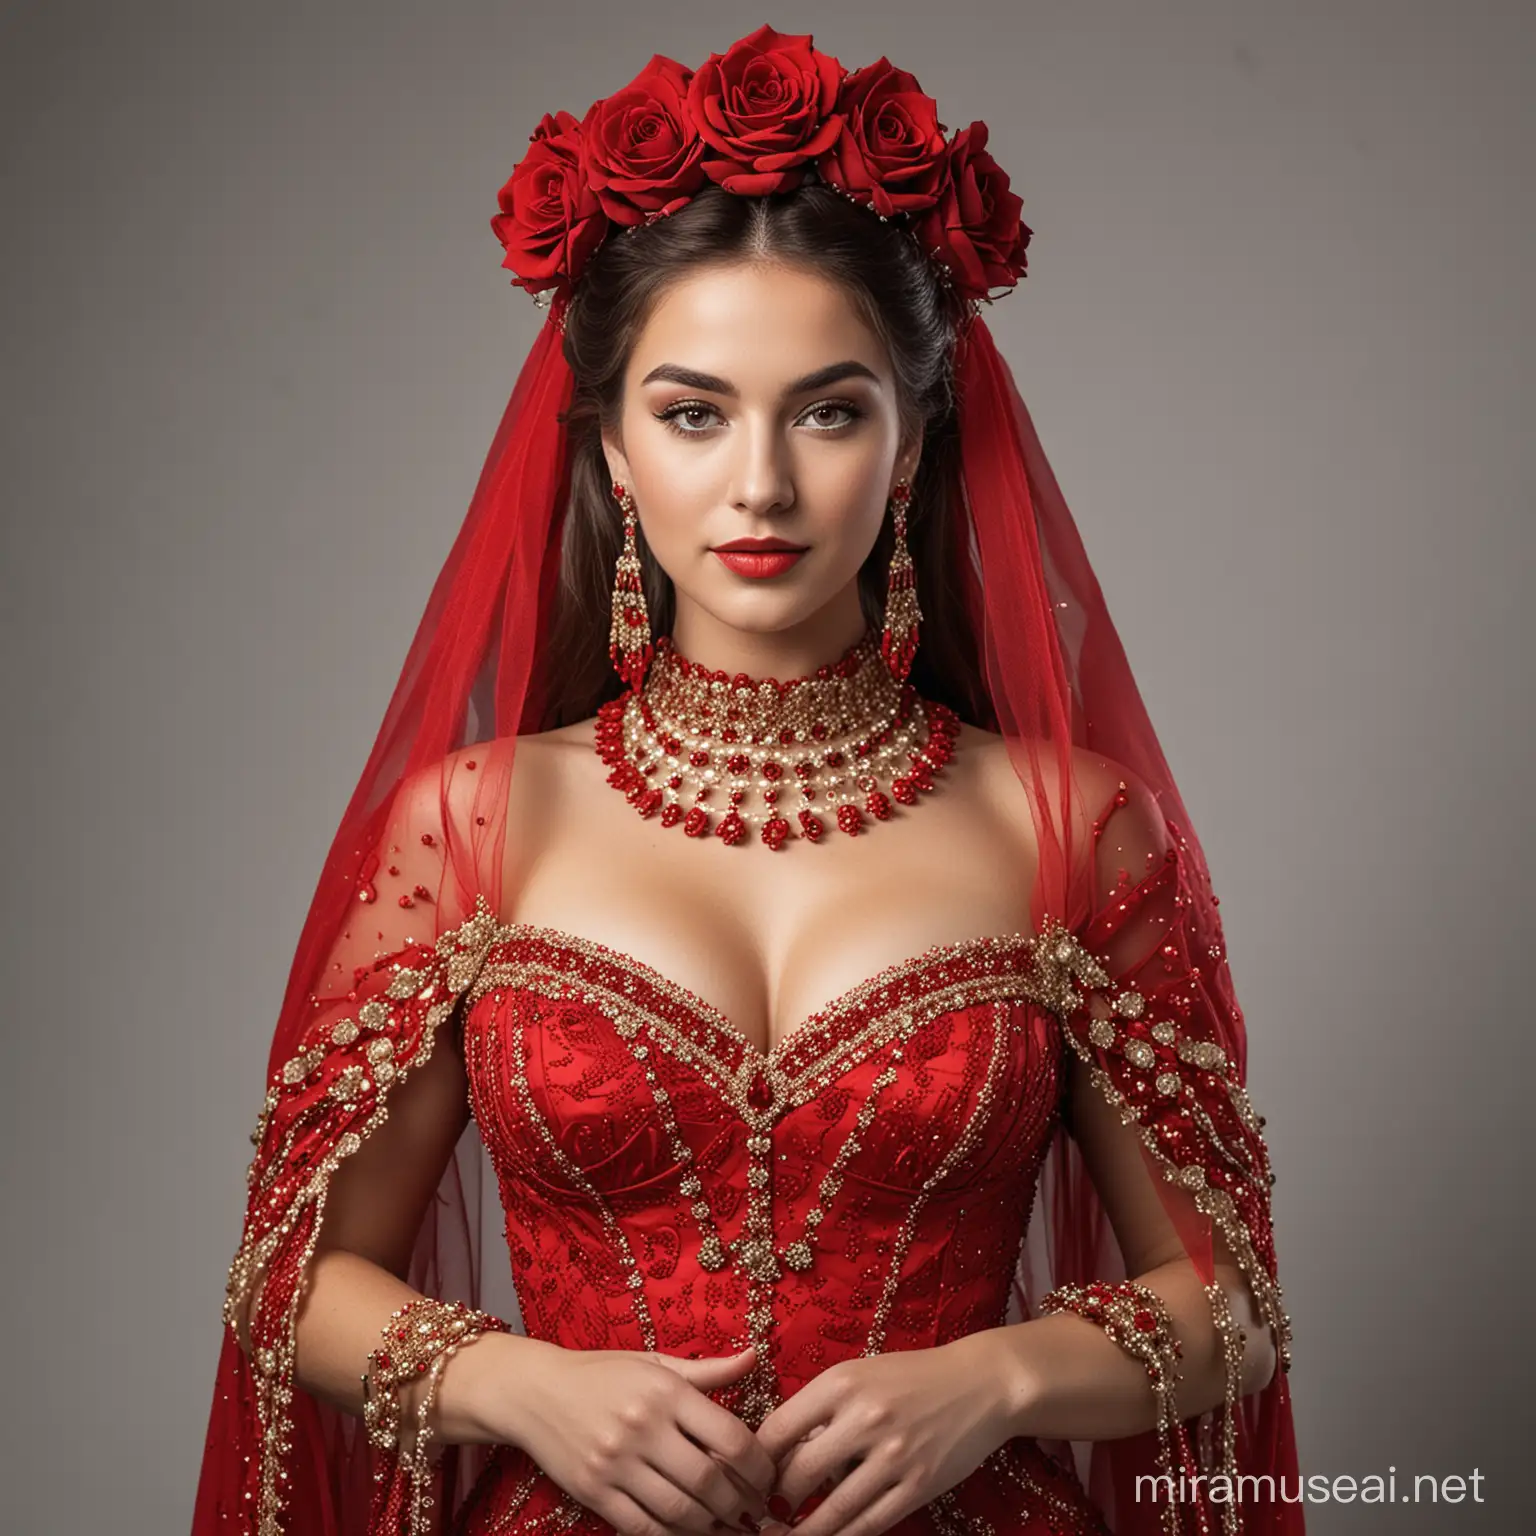 Regal Red Rose Queen in Full Dress